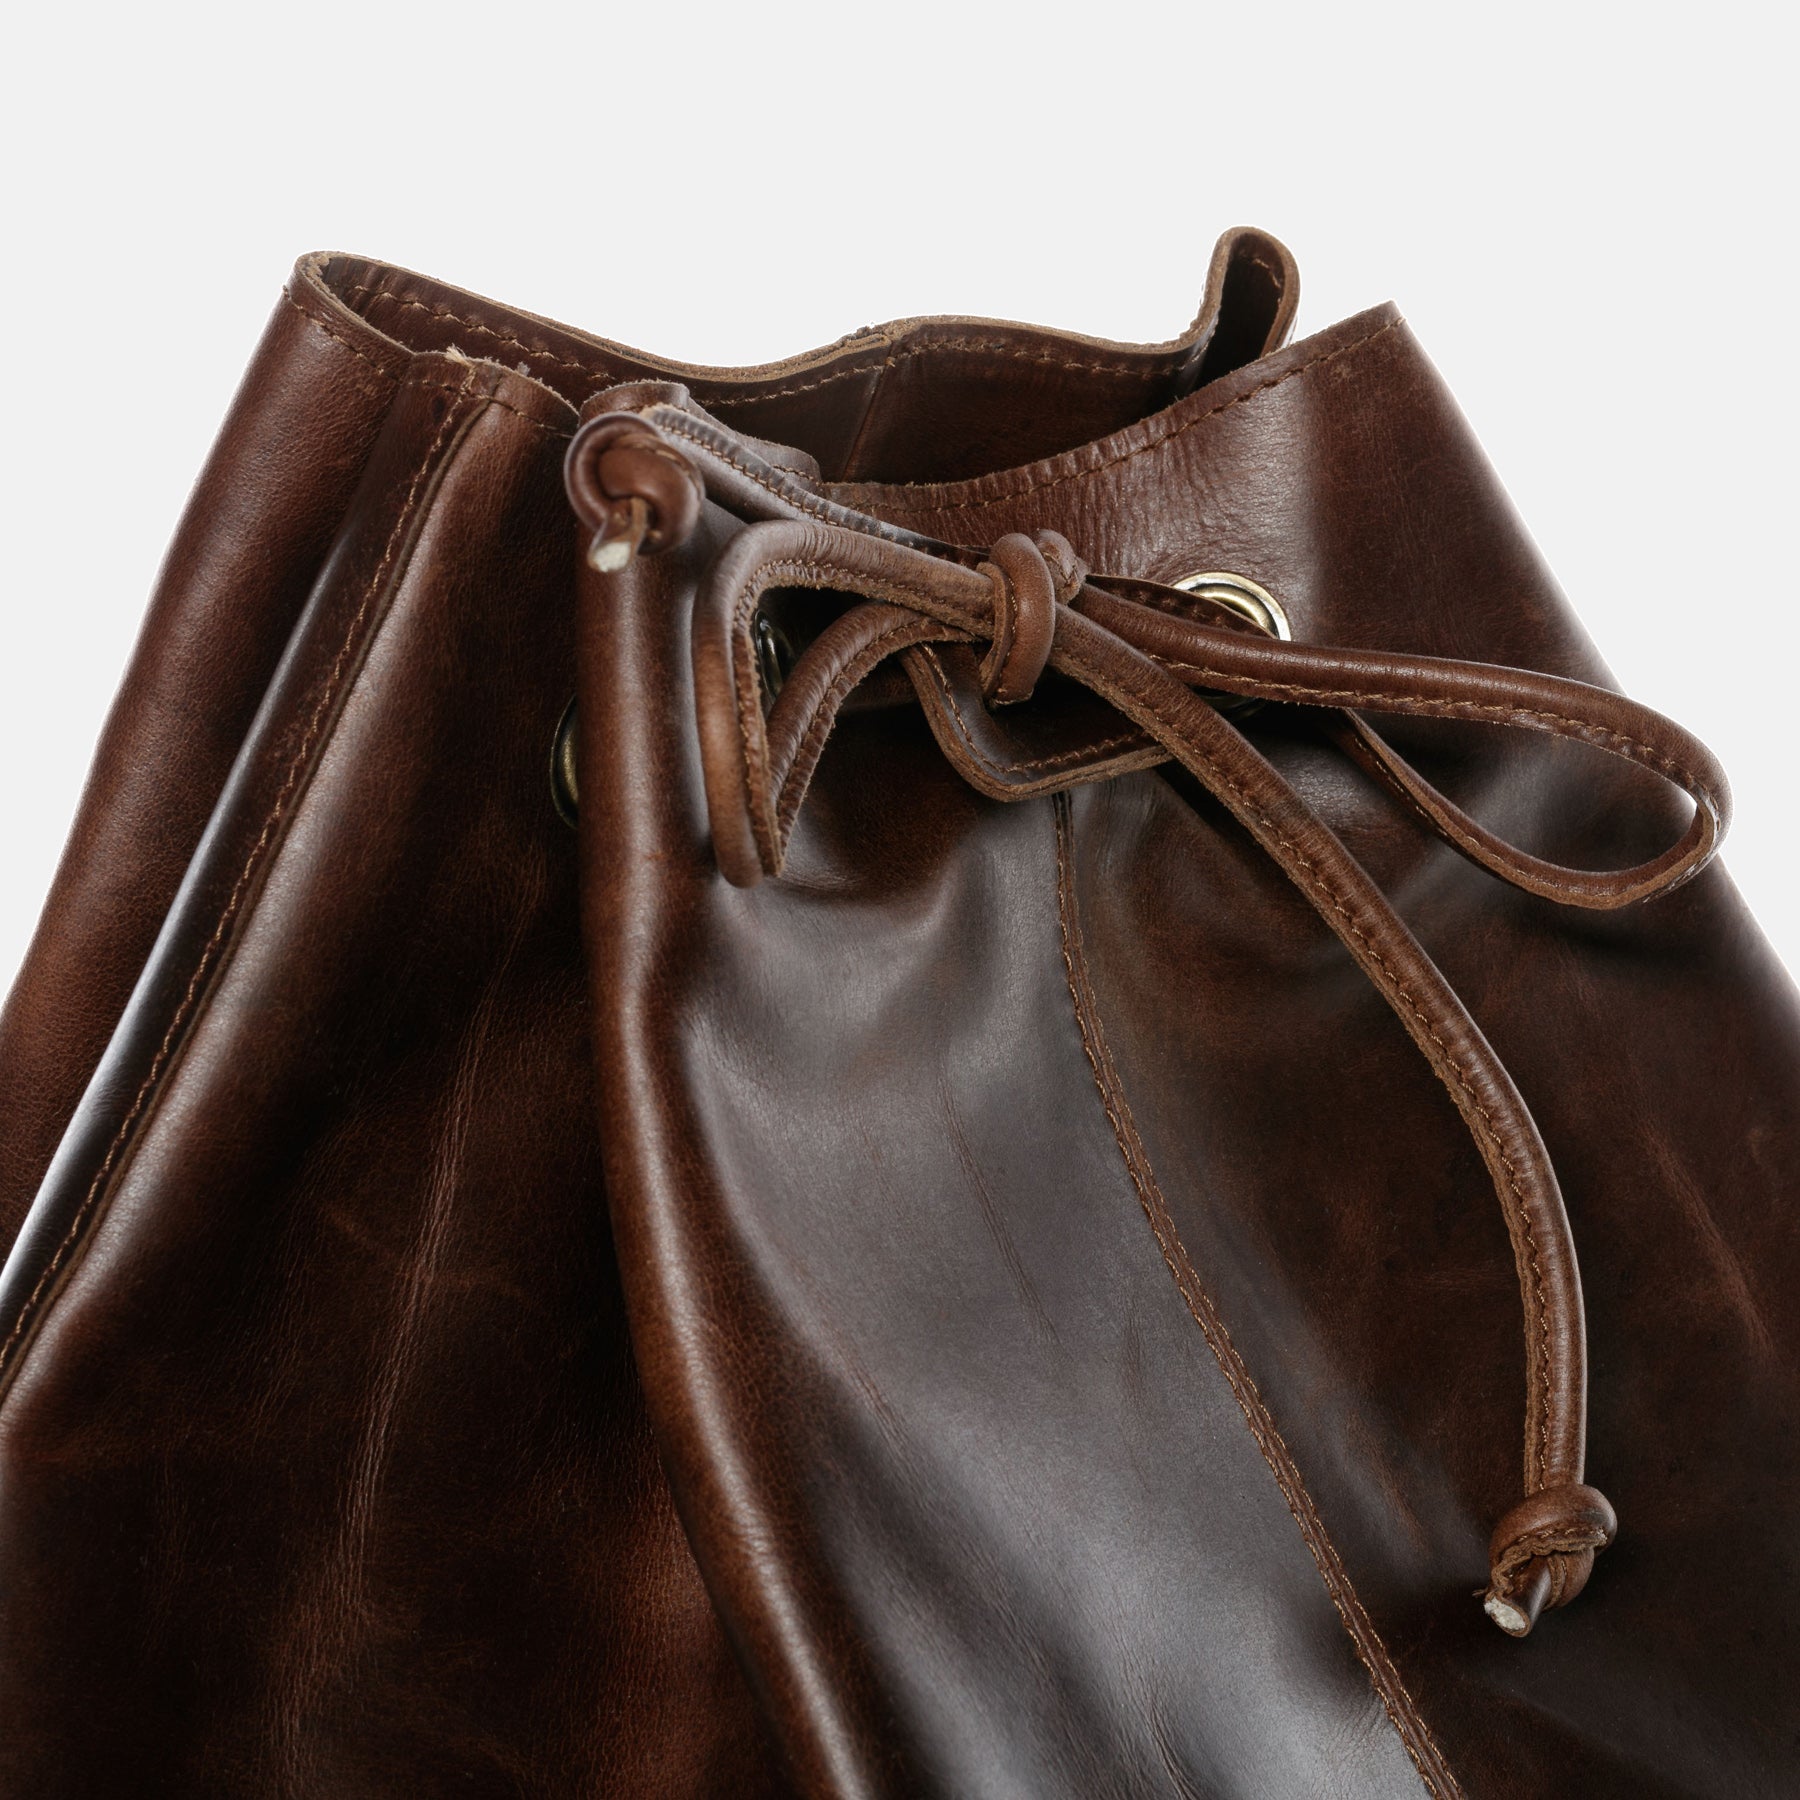 XL Duffel bag HEATHROW natural leather brown-cognac